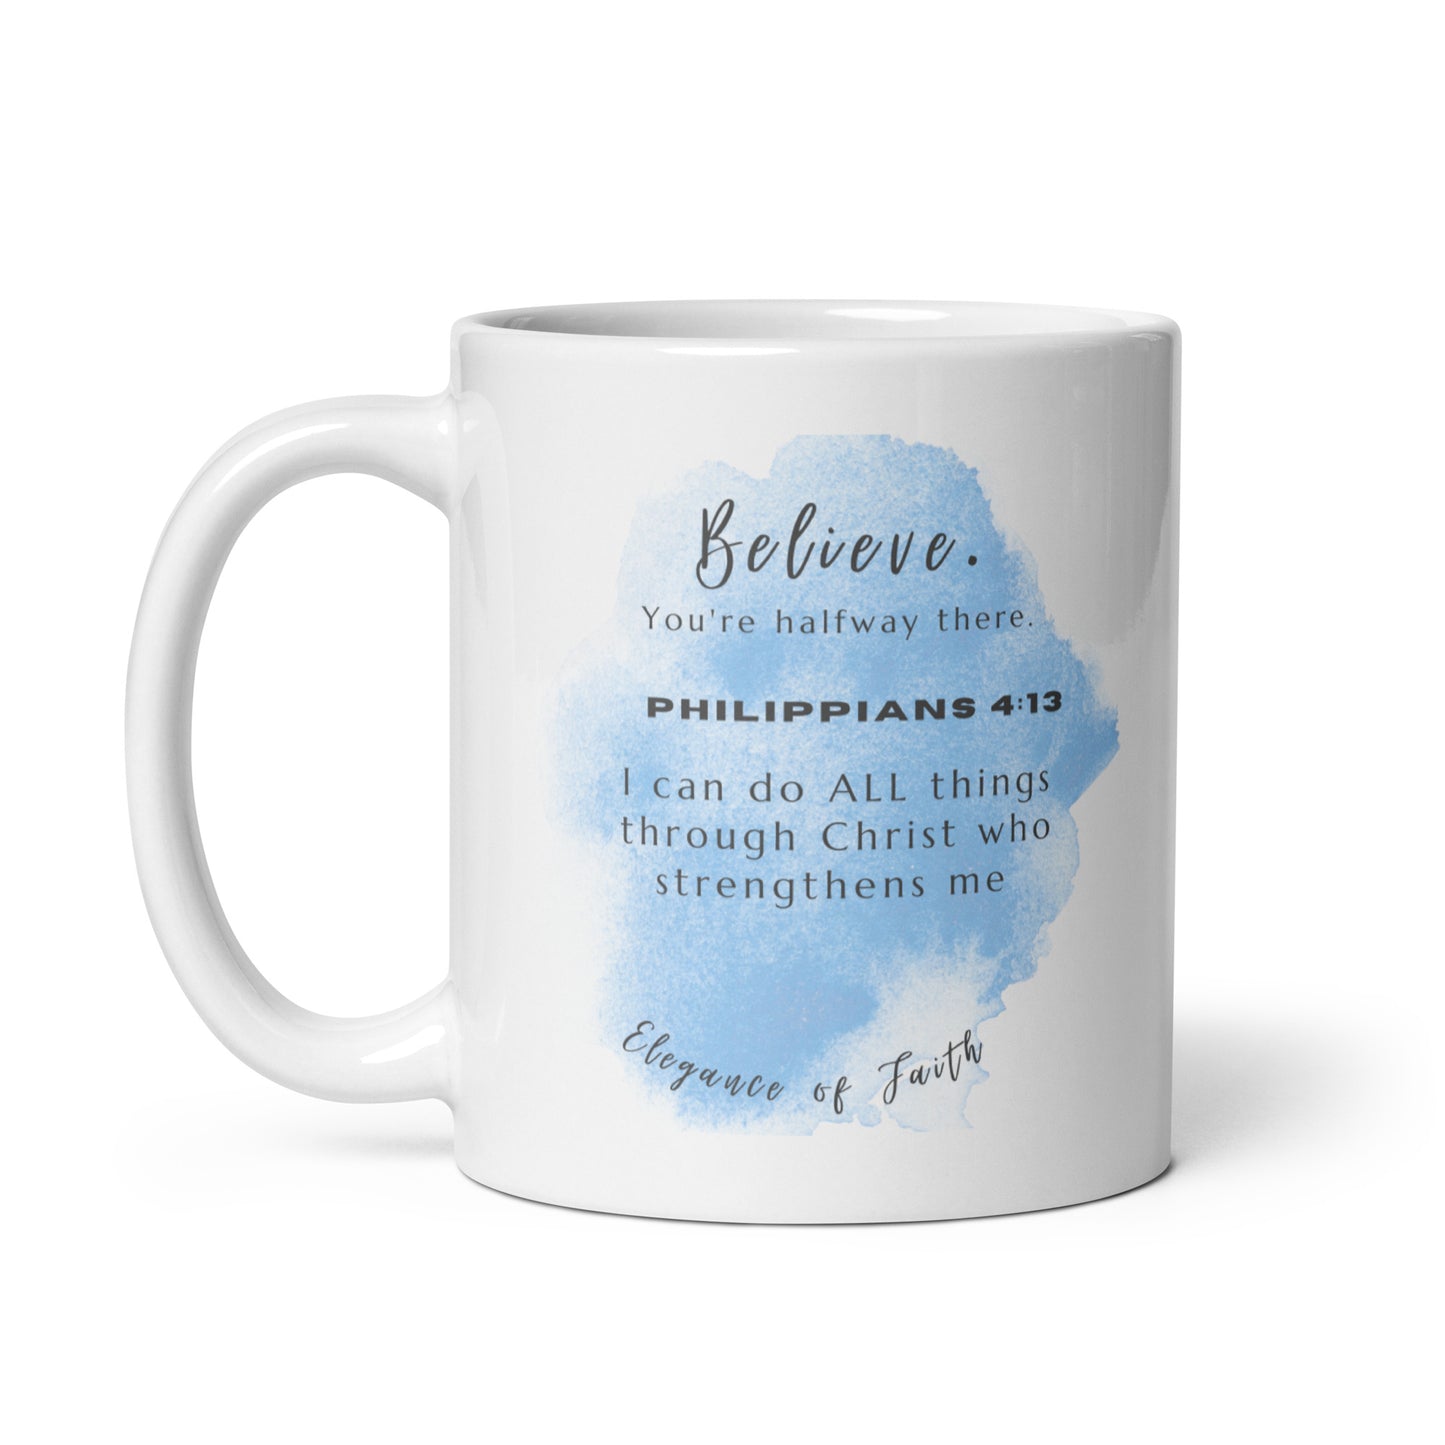 Believe - Philippians  4:13 White glossy mug